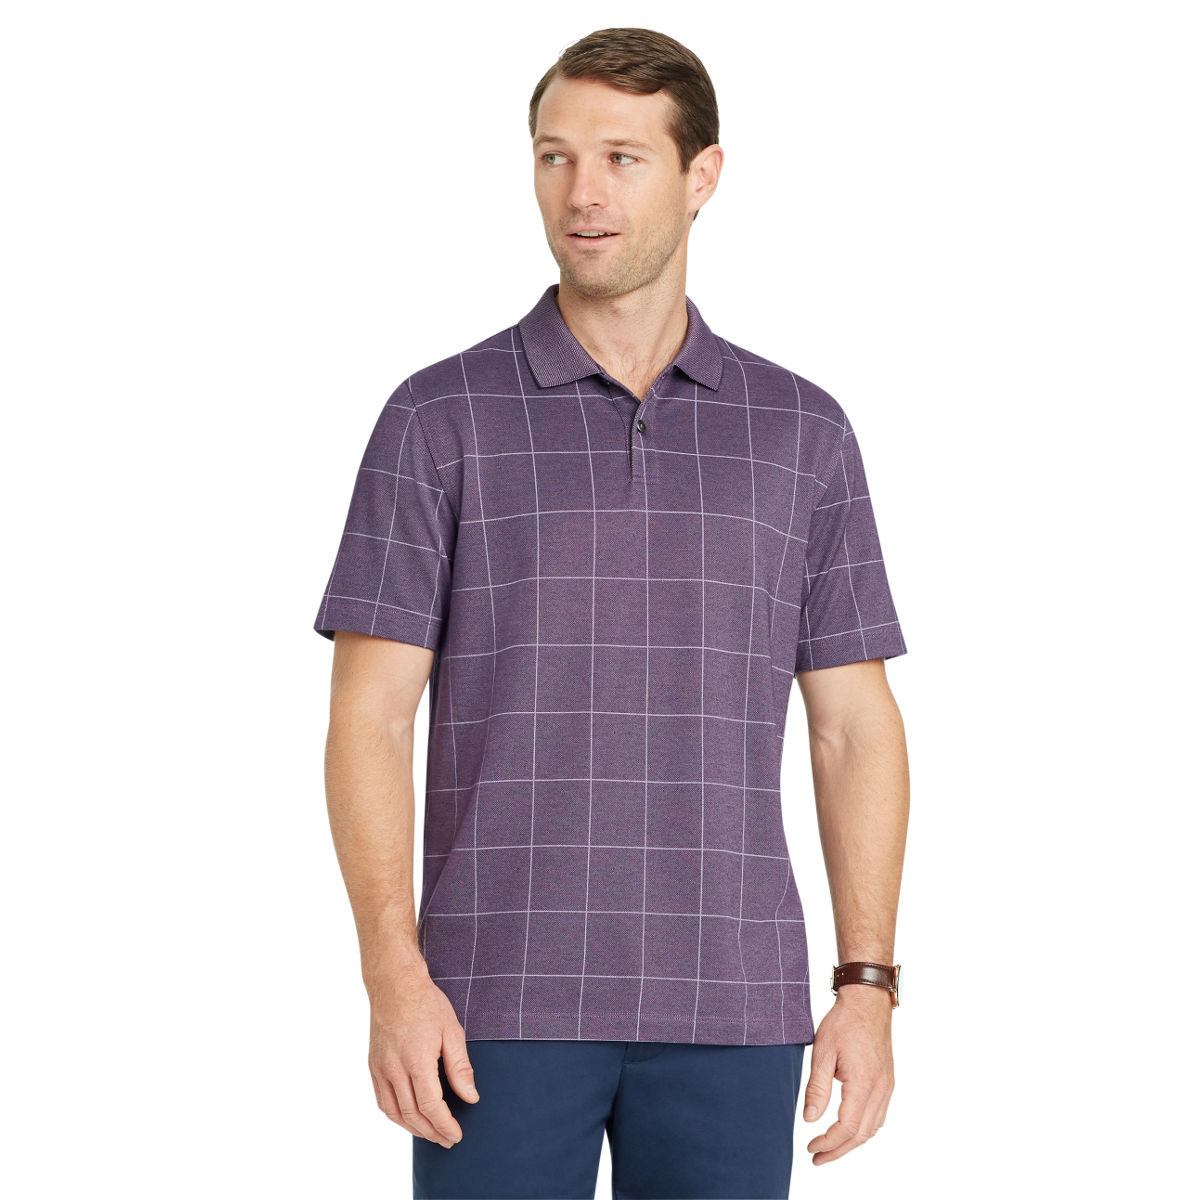 Van Heusen Men's Flex Print Windowpane Short-Sleeve Polo Shirt - Purple, M